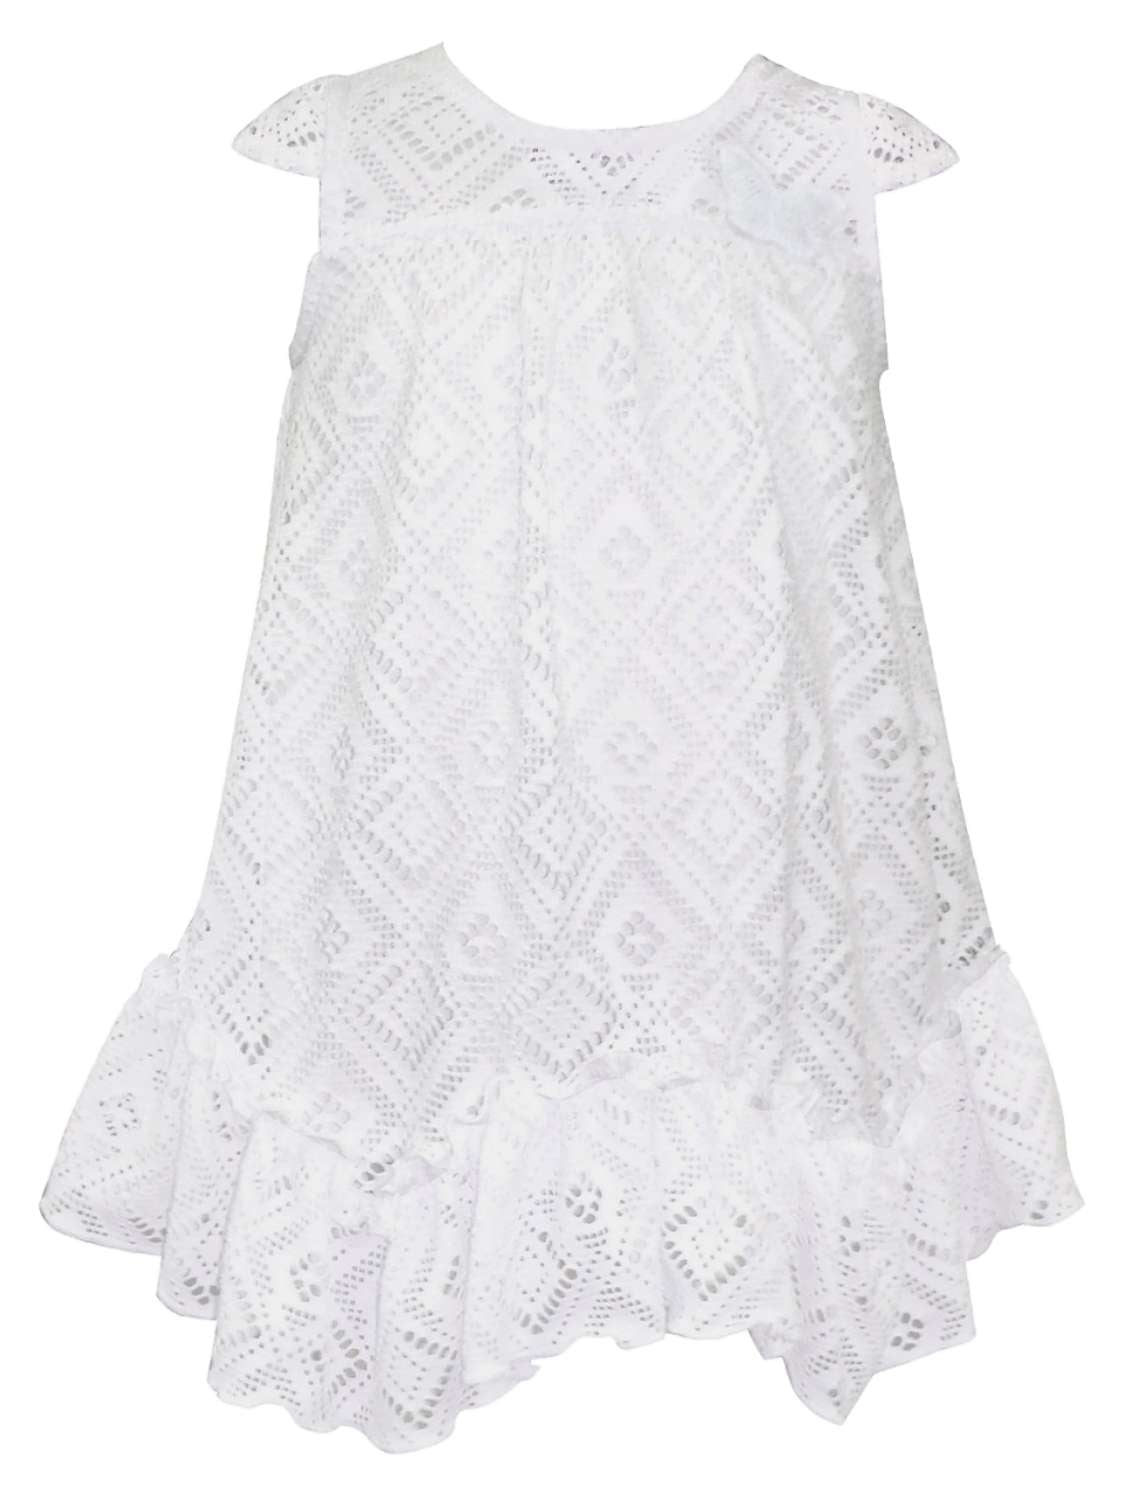 Lilt Toddler Girls White Lace Sun Dress ...